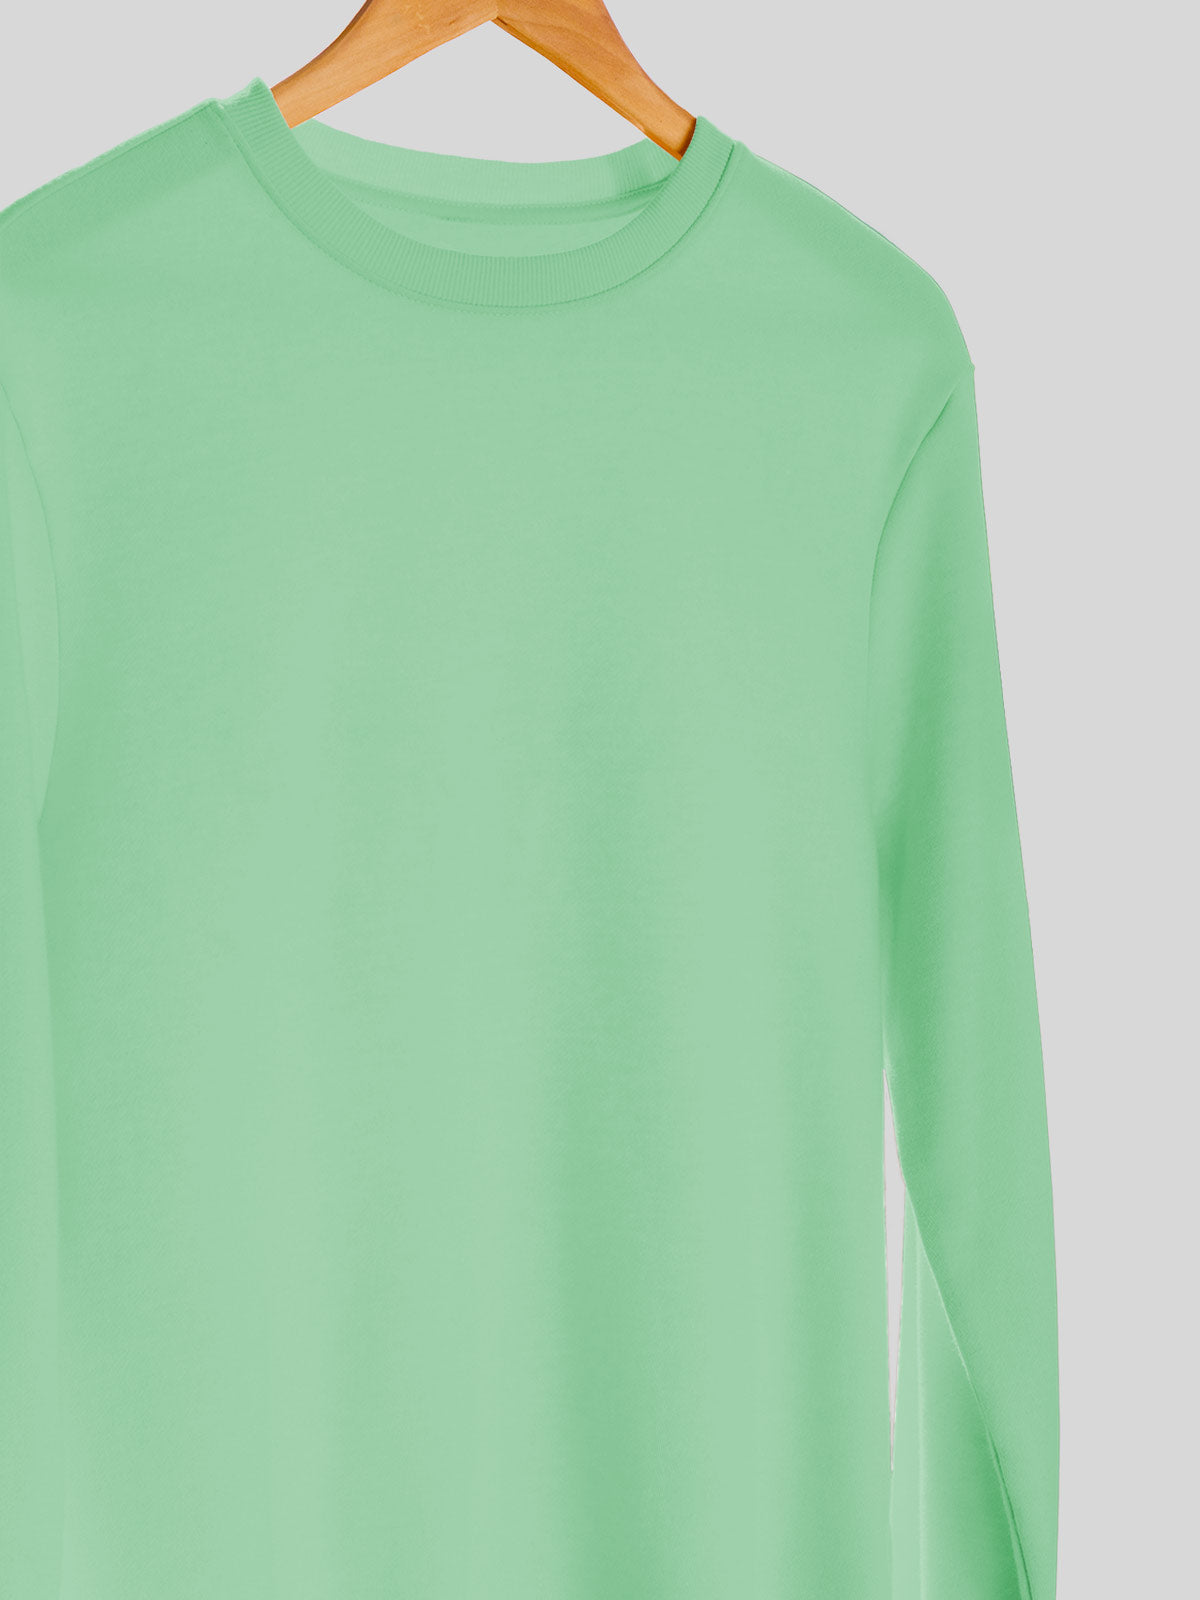 Frosted Mint | Unisex Plain Sweatshirt